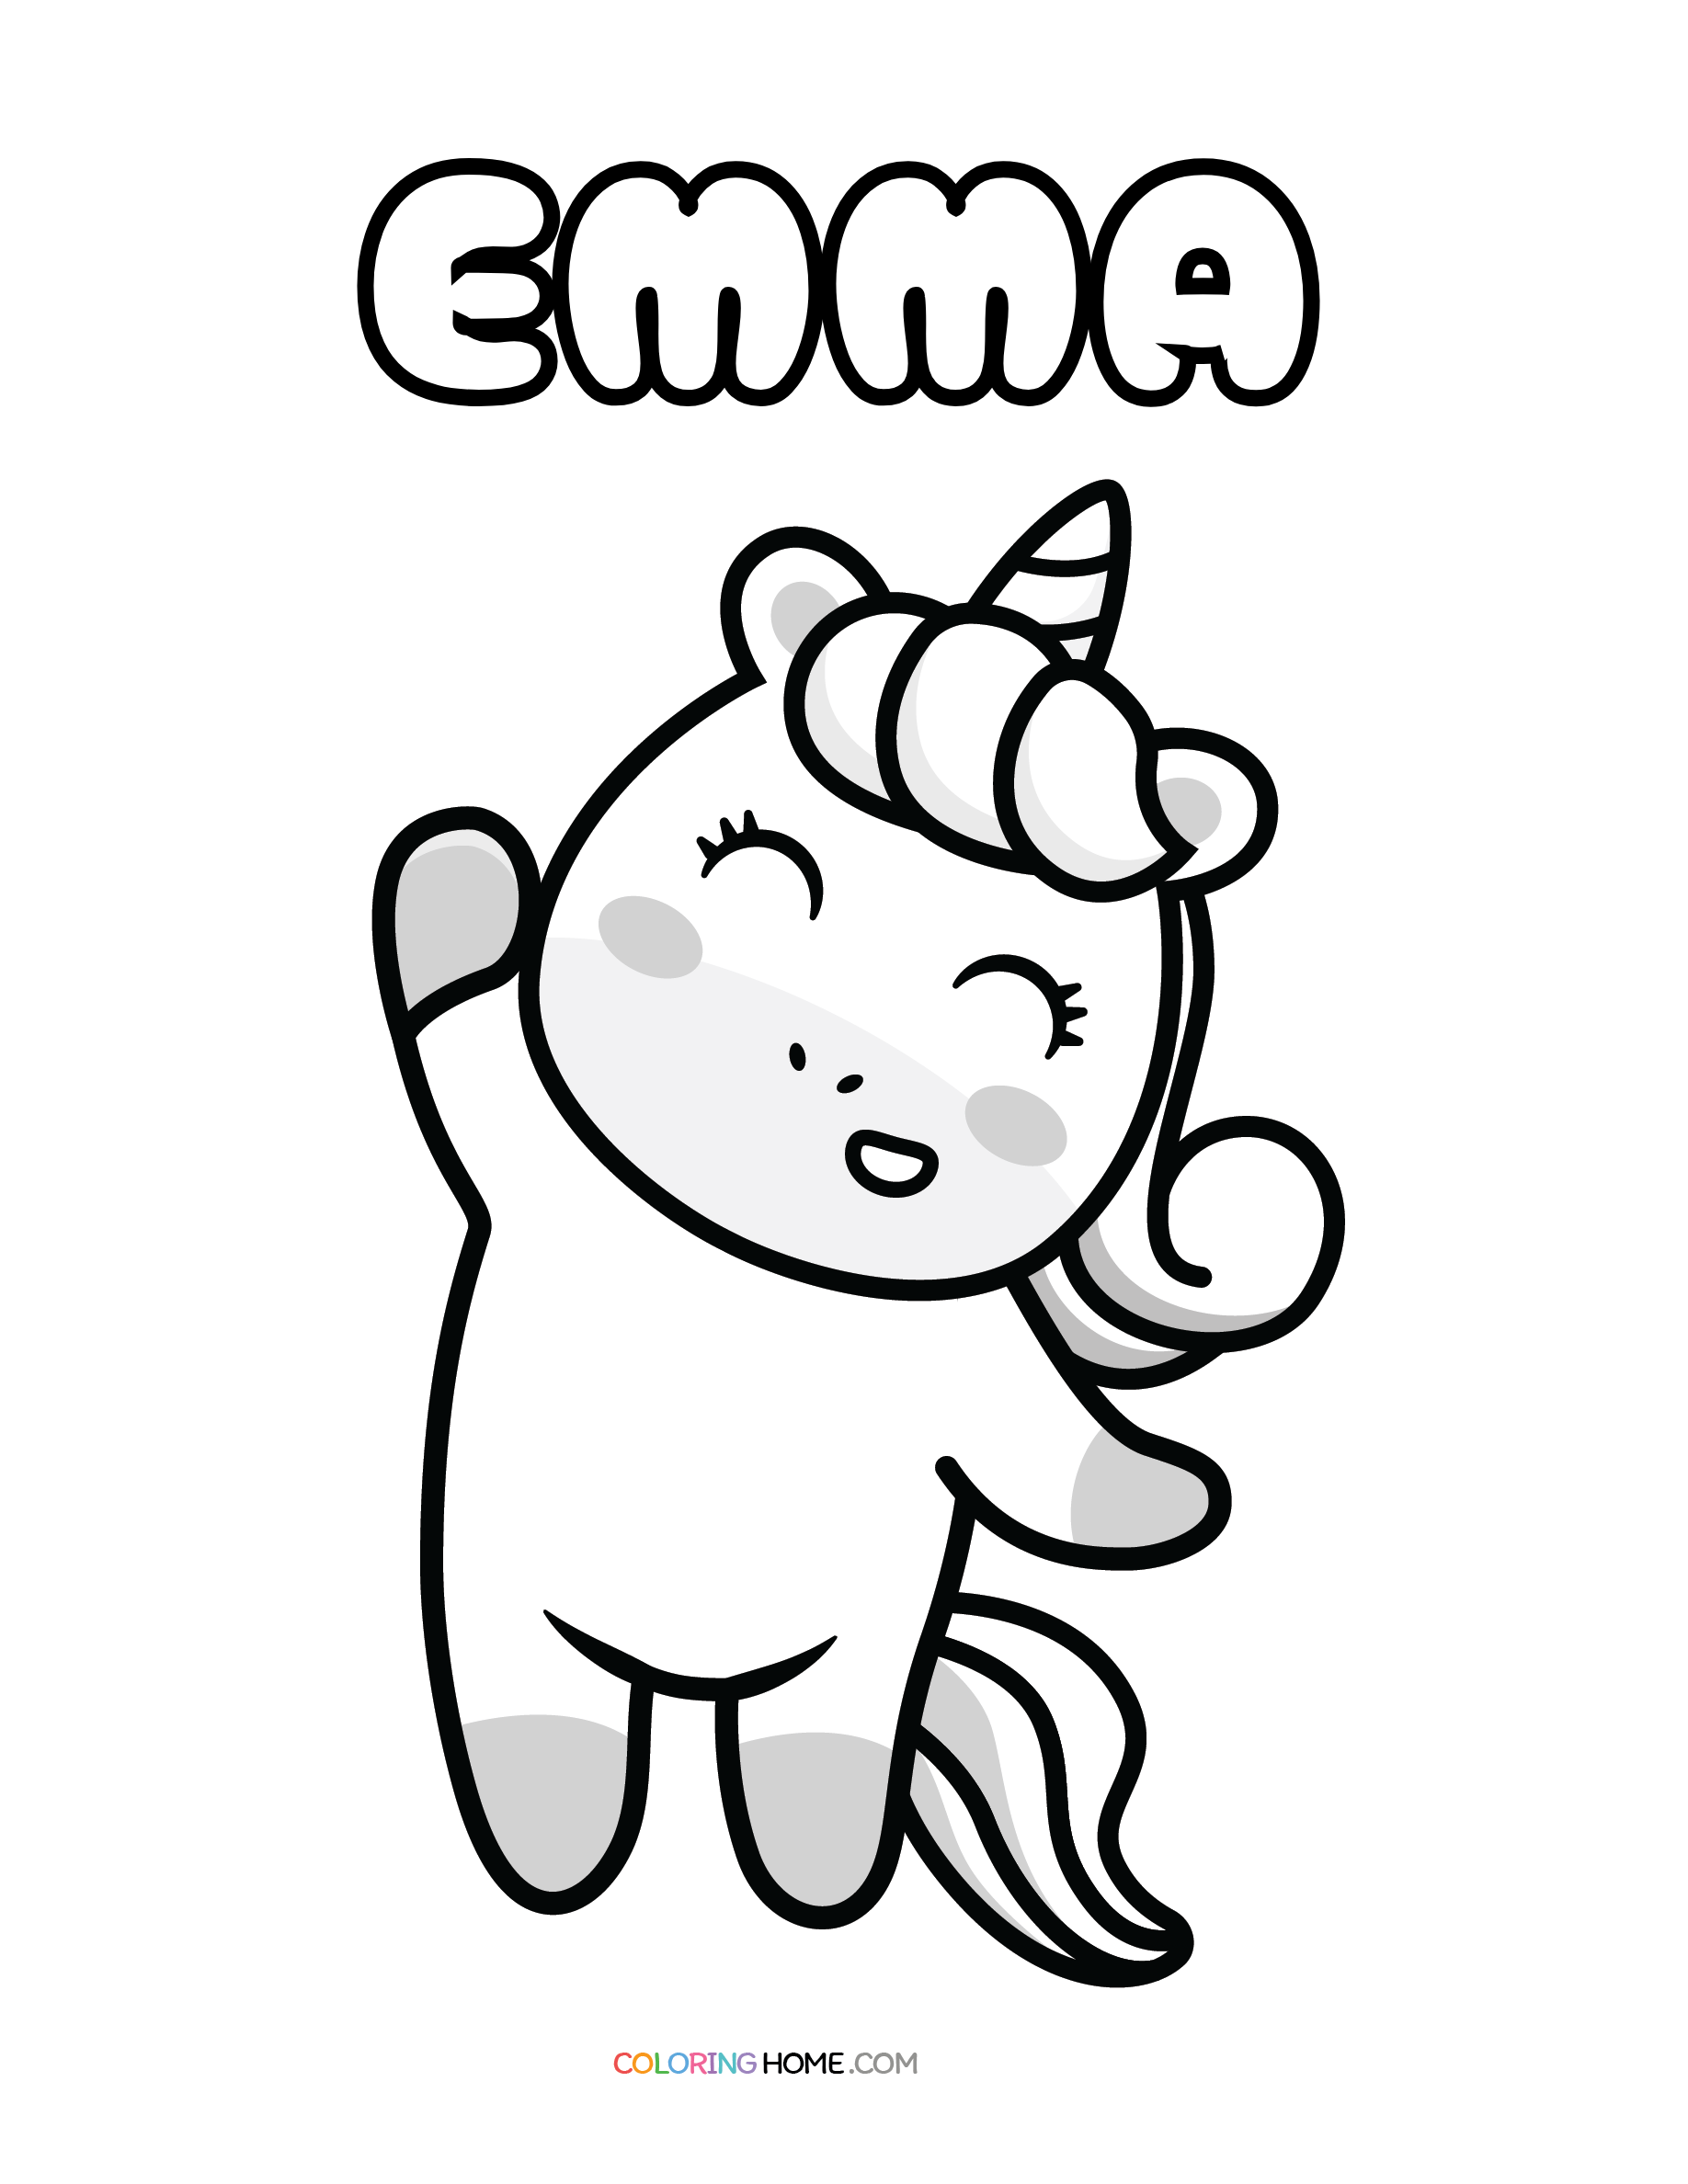 Emma unicorn coloring page